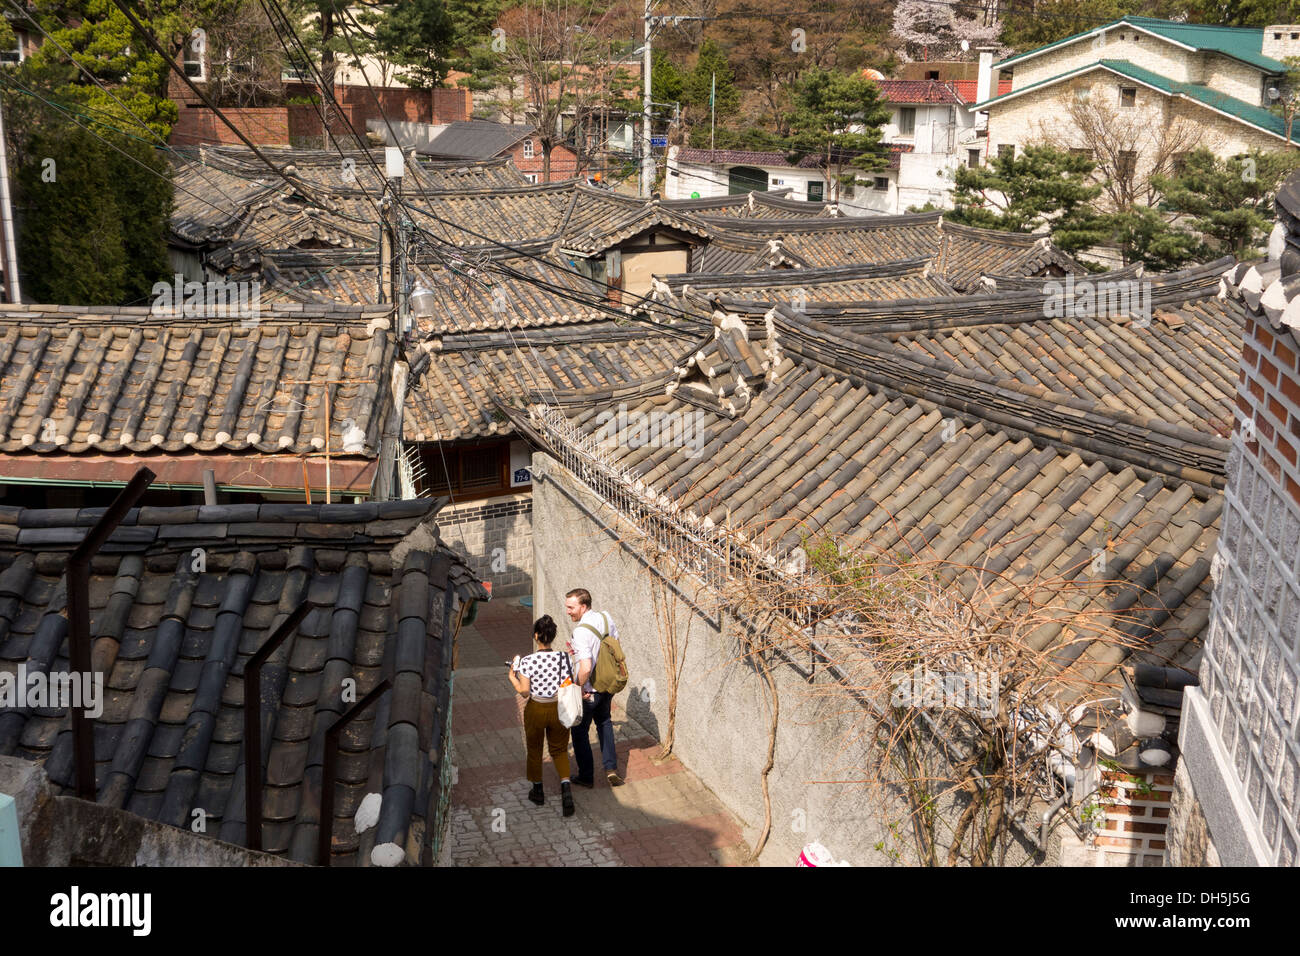 Rooftops of old traditional houses in Bukchon Hanok Village, Seoul, Korea Stock Photo